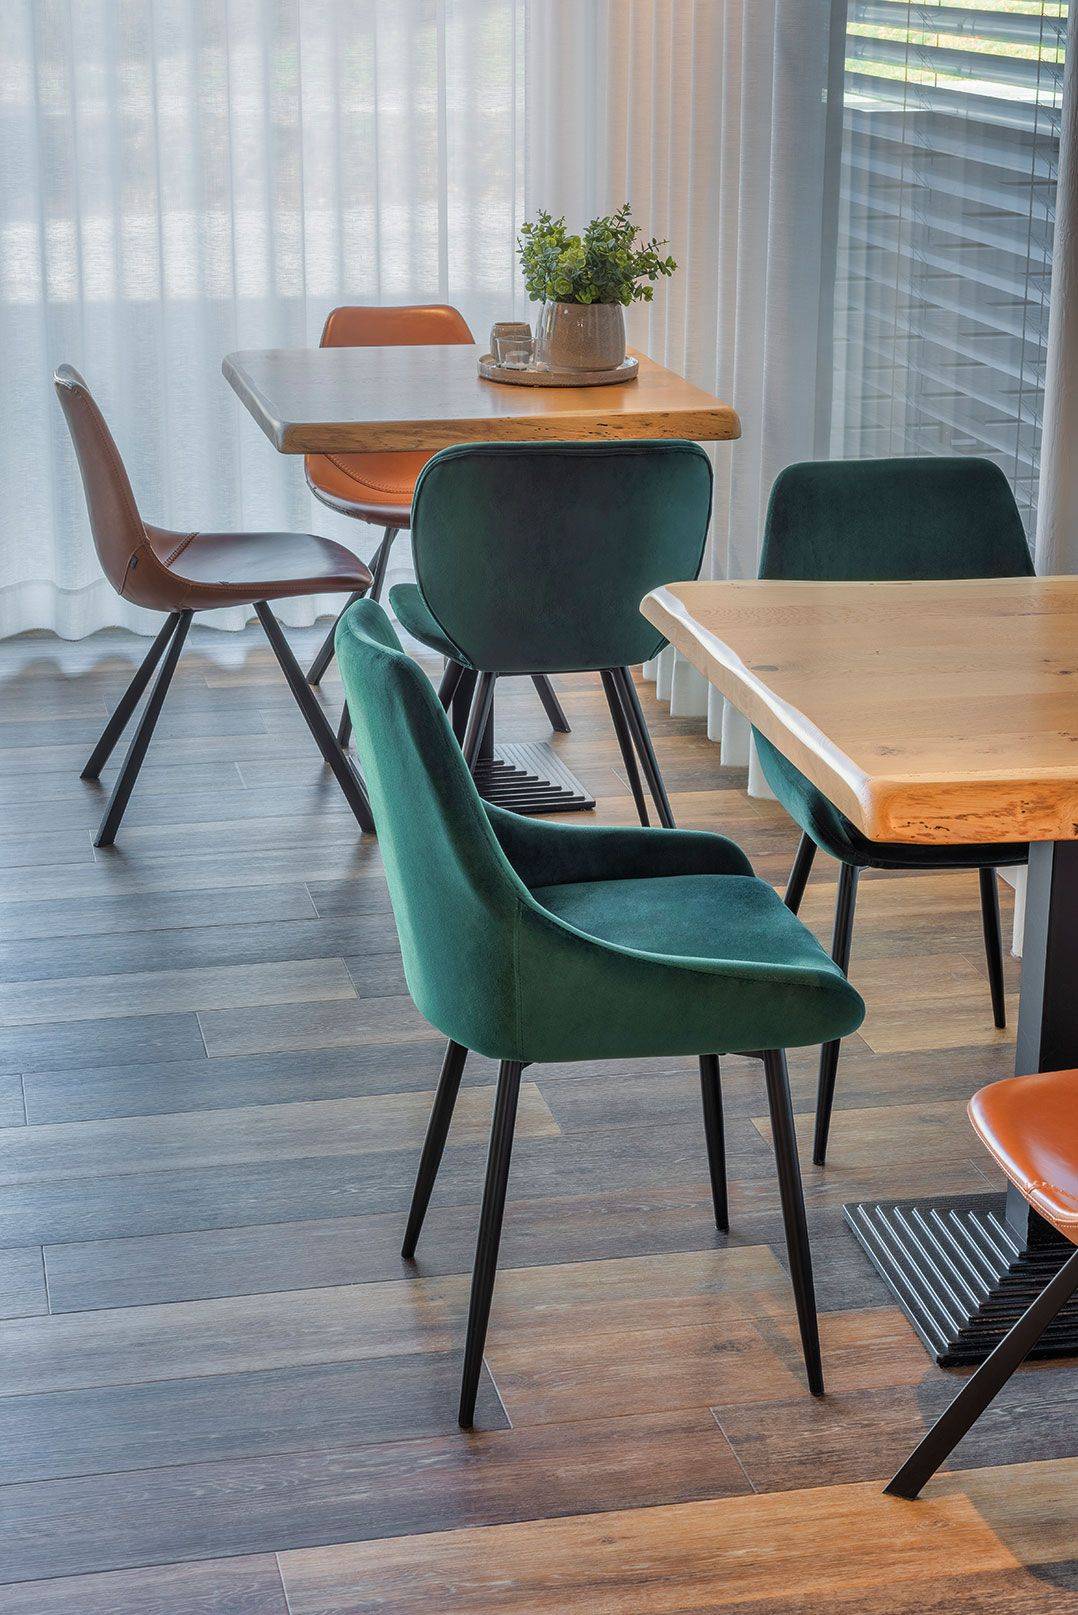 Indoor Café furniture for your hotel or restaurant